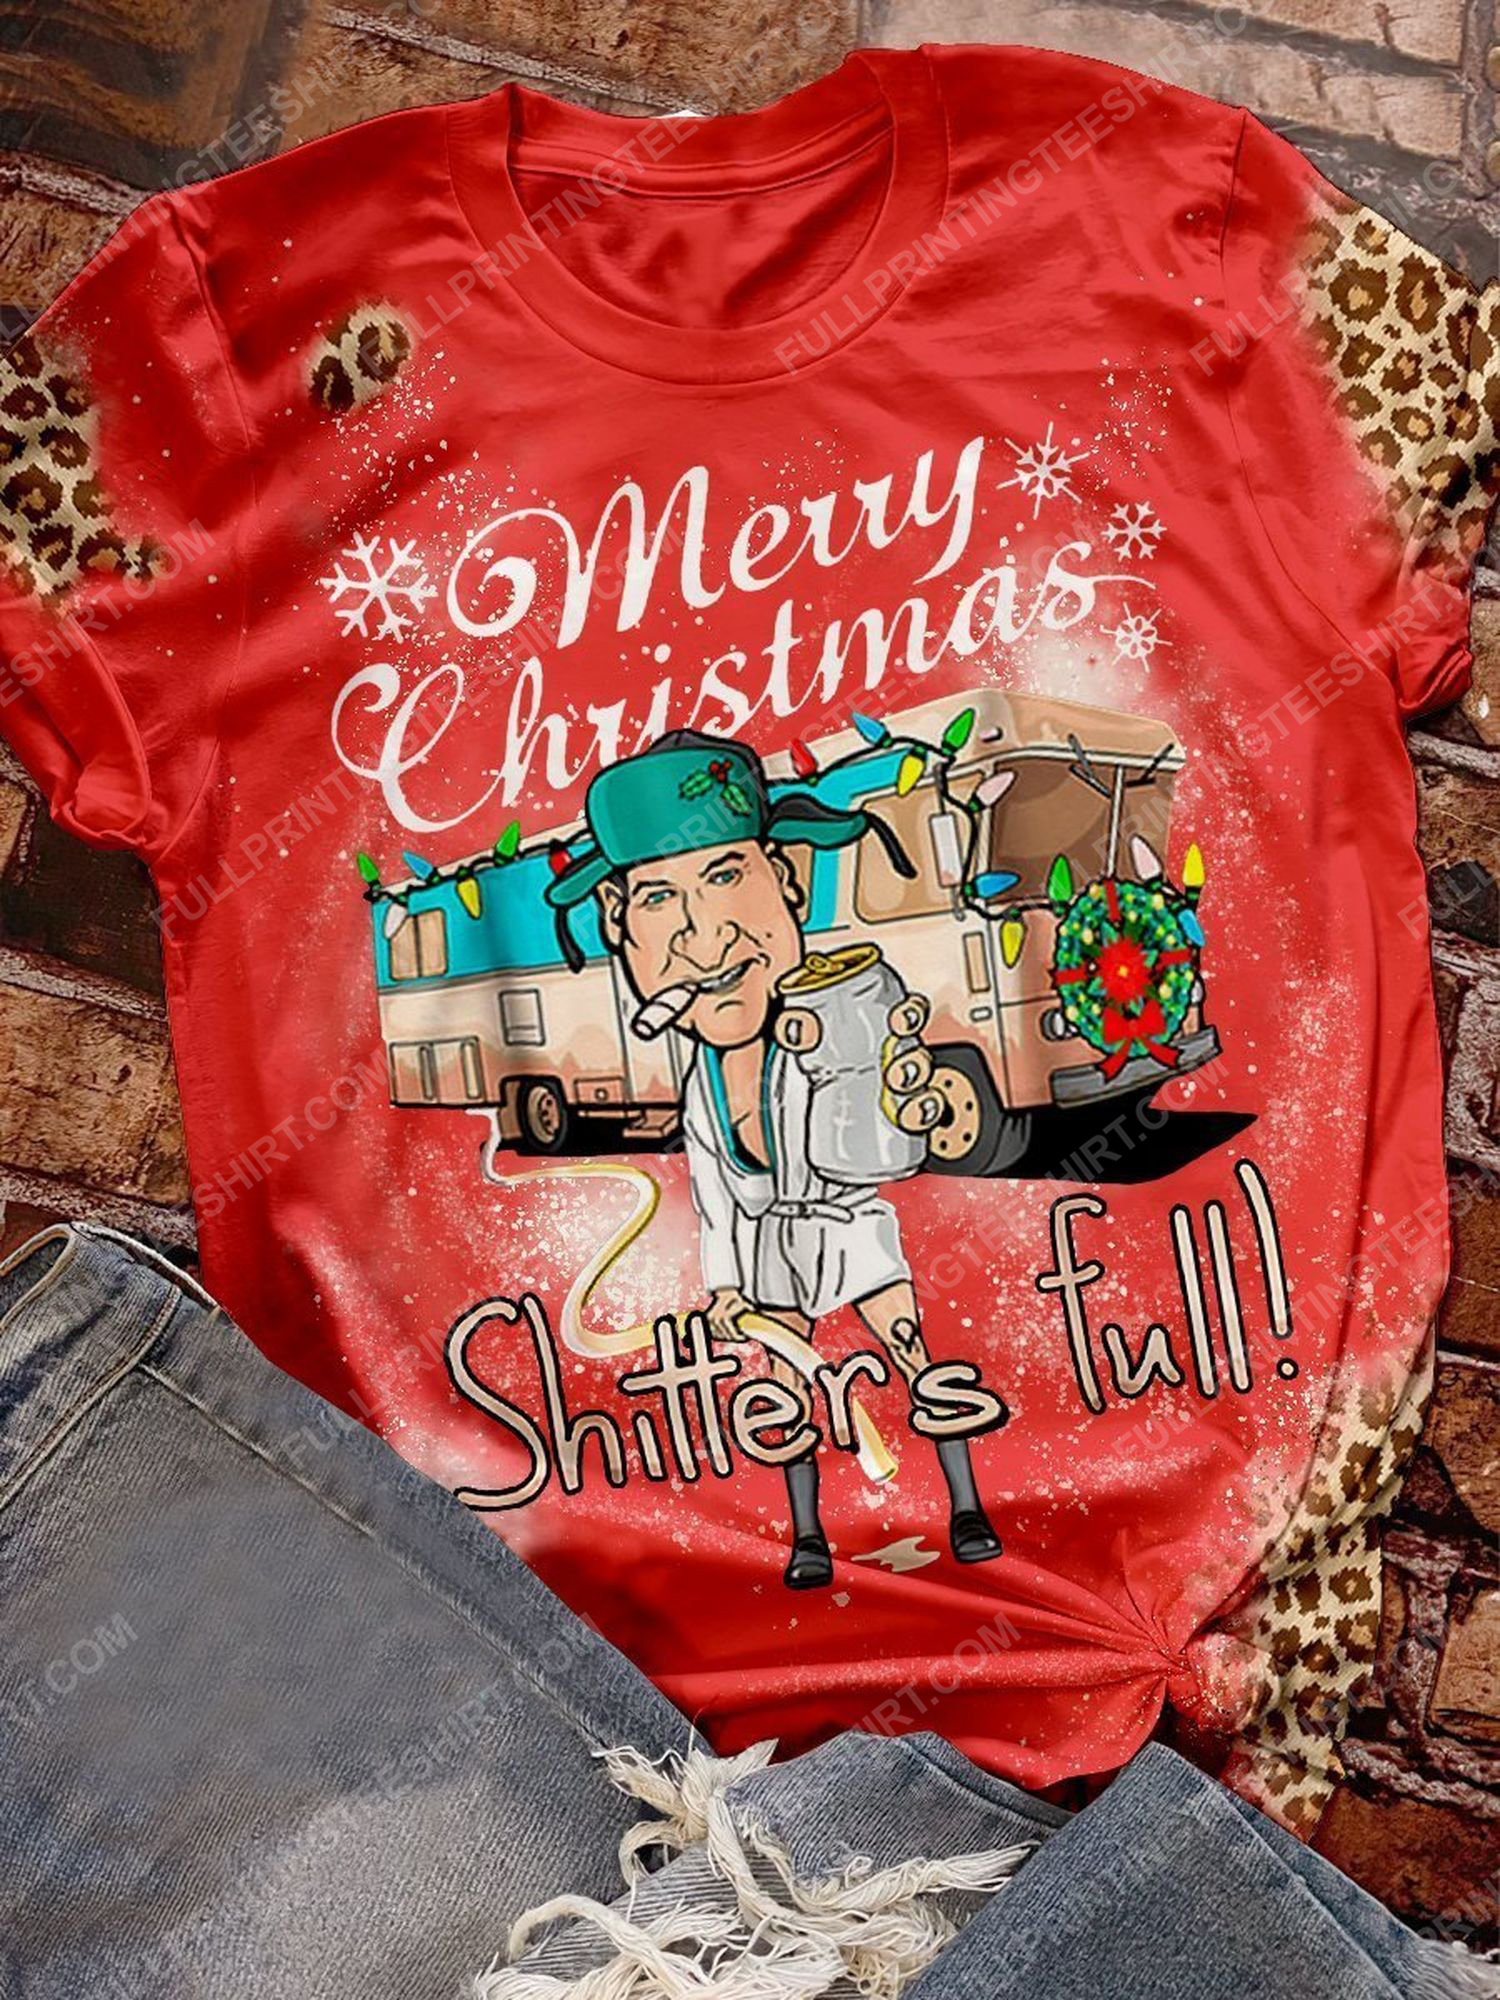 Christmas vacation cousin eddie shitter's full shirt 1